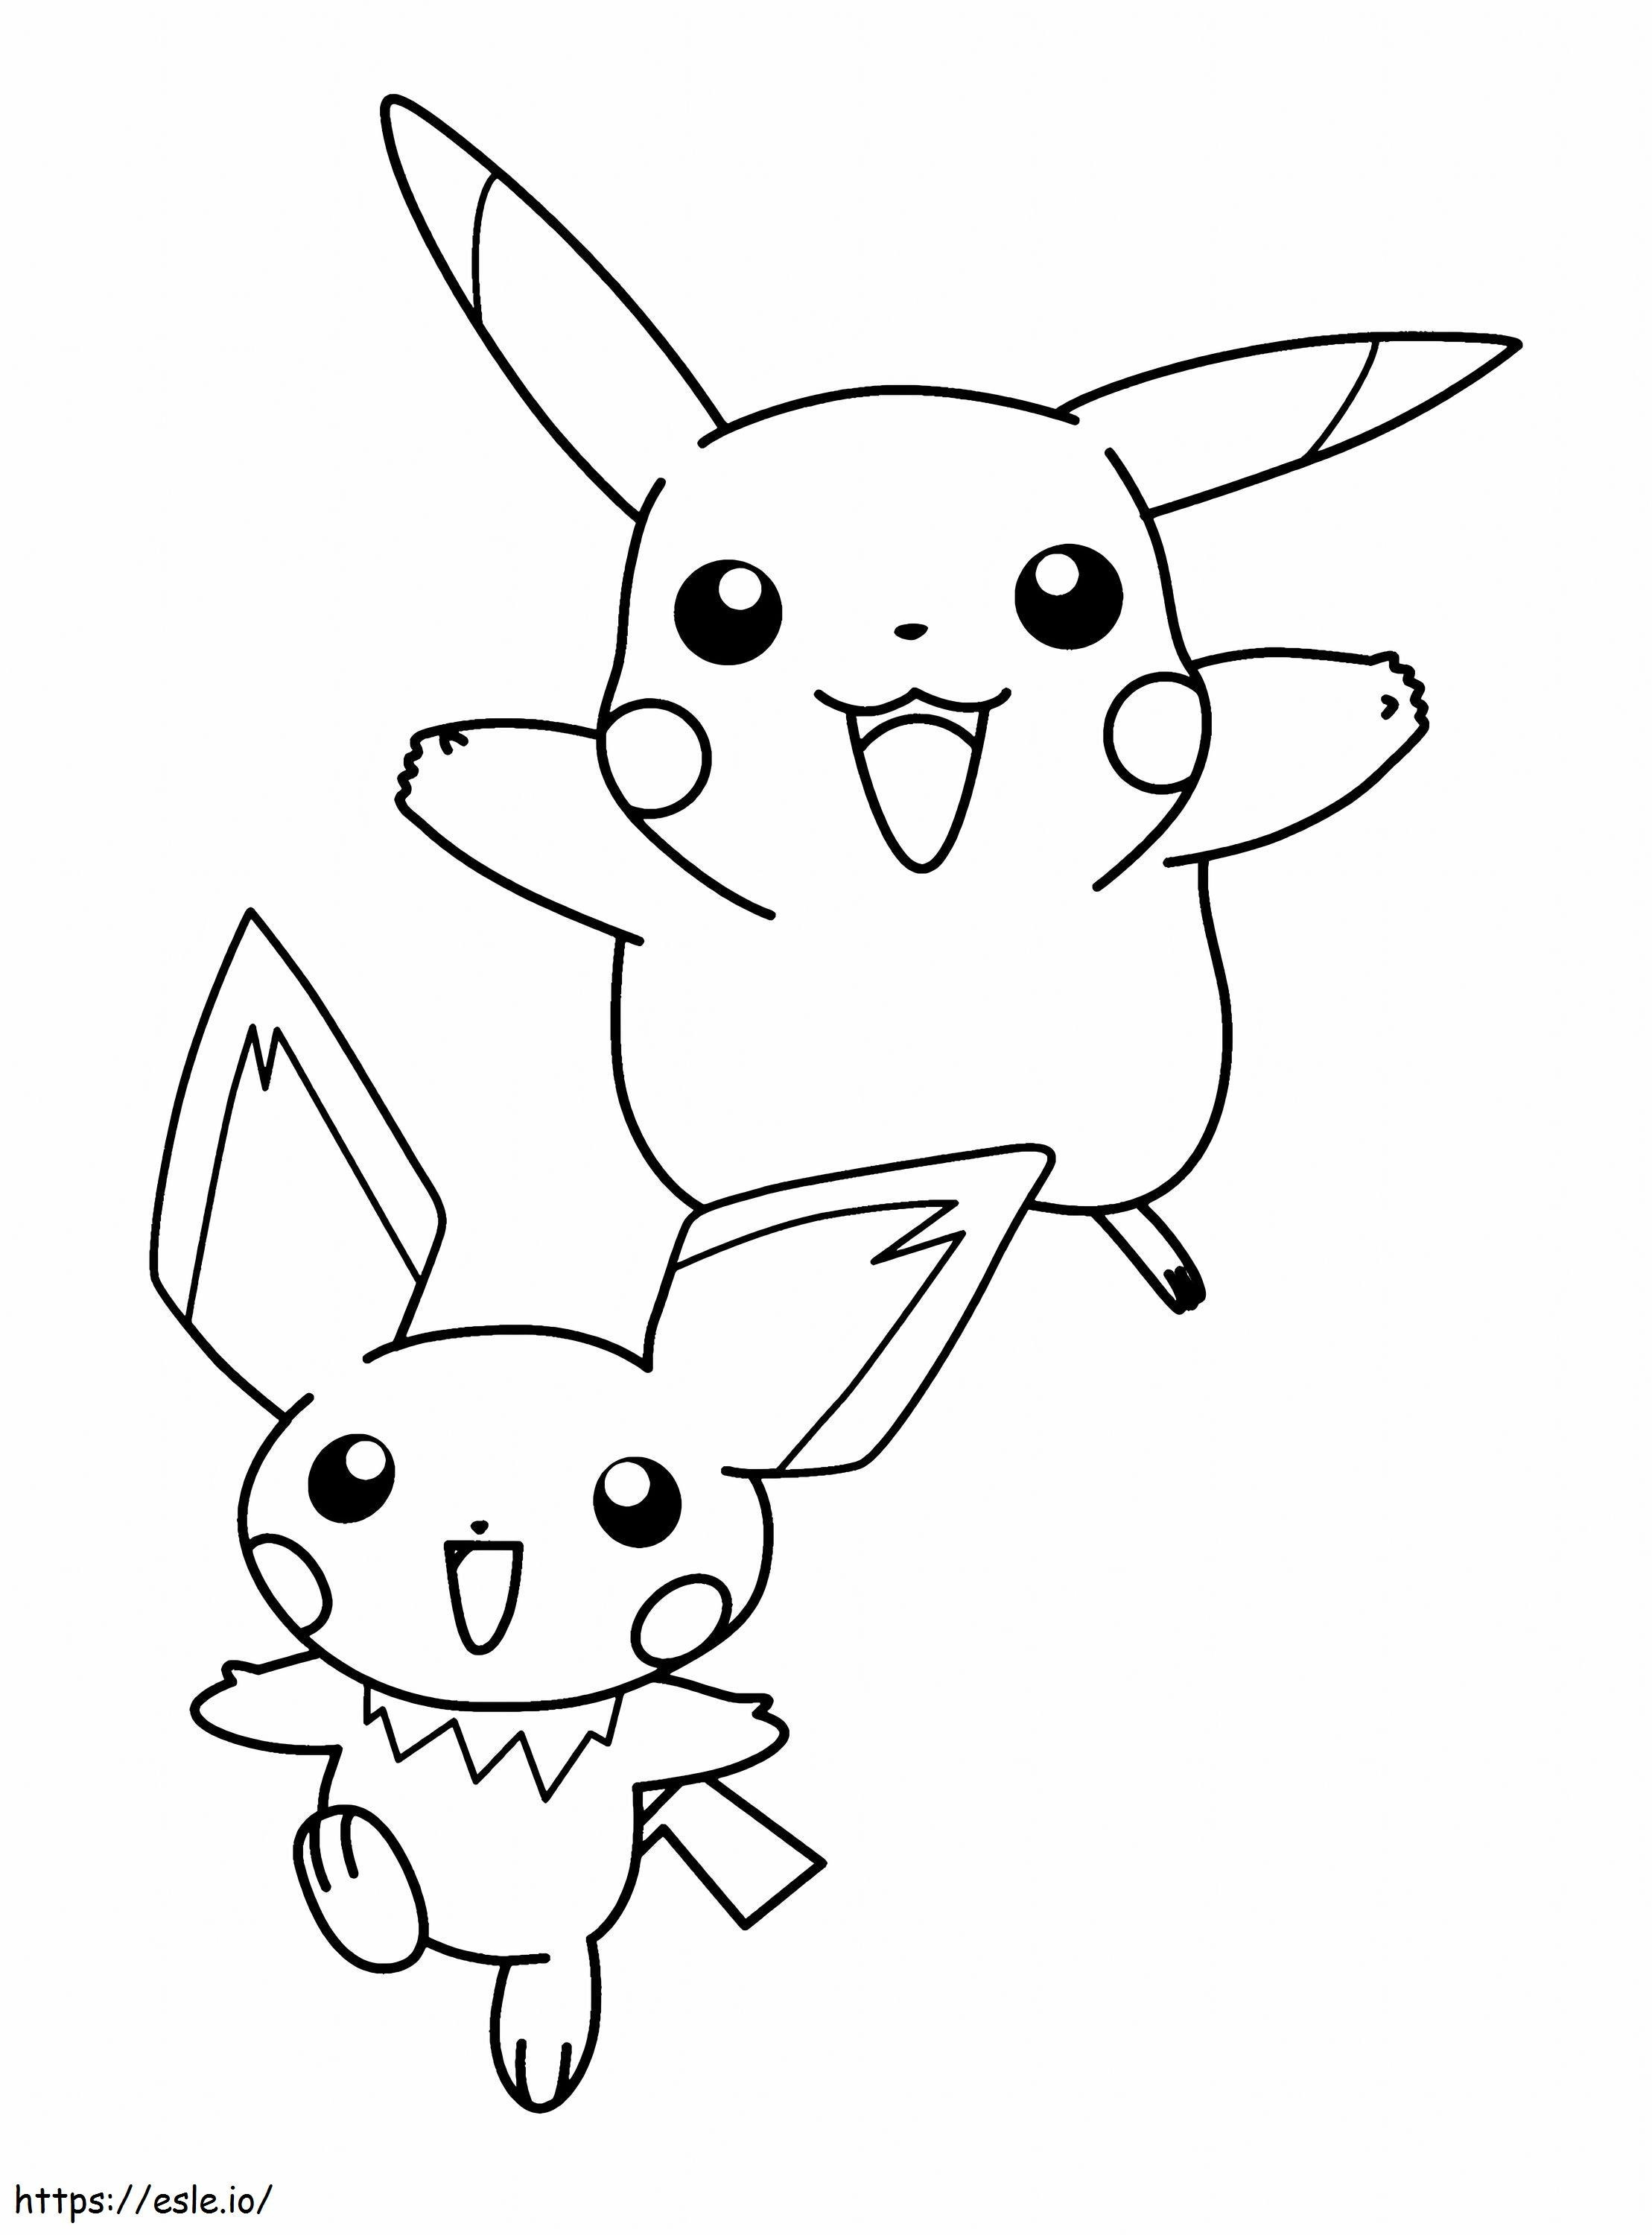 Coloriage Pikachu et Pichu à imprimer dessin